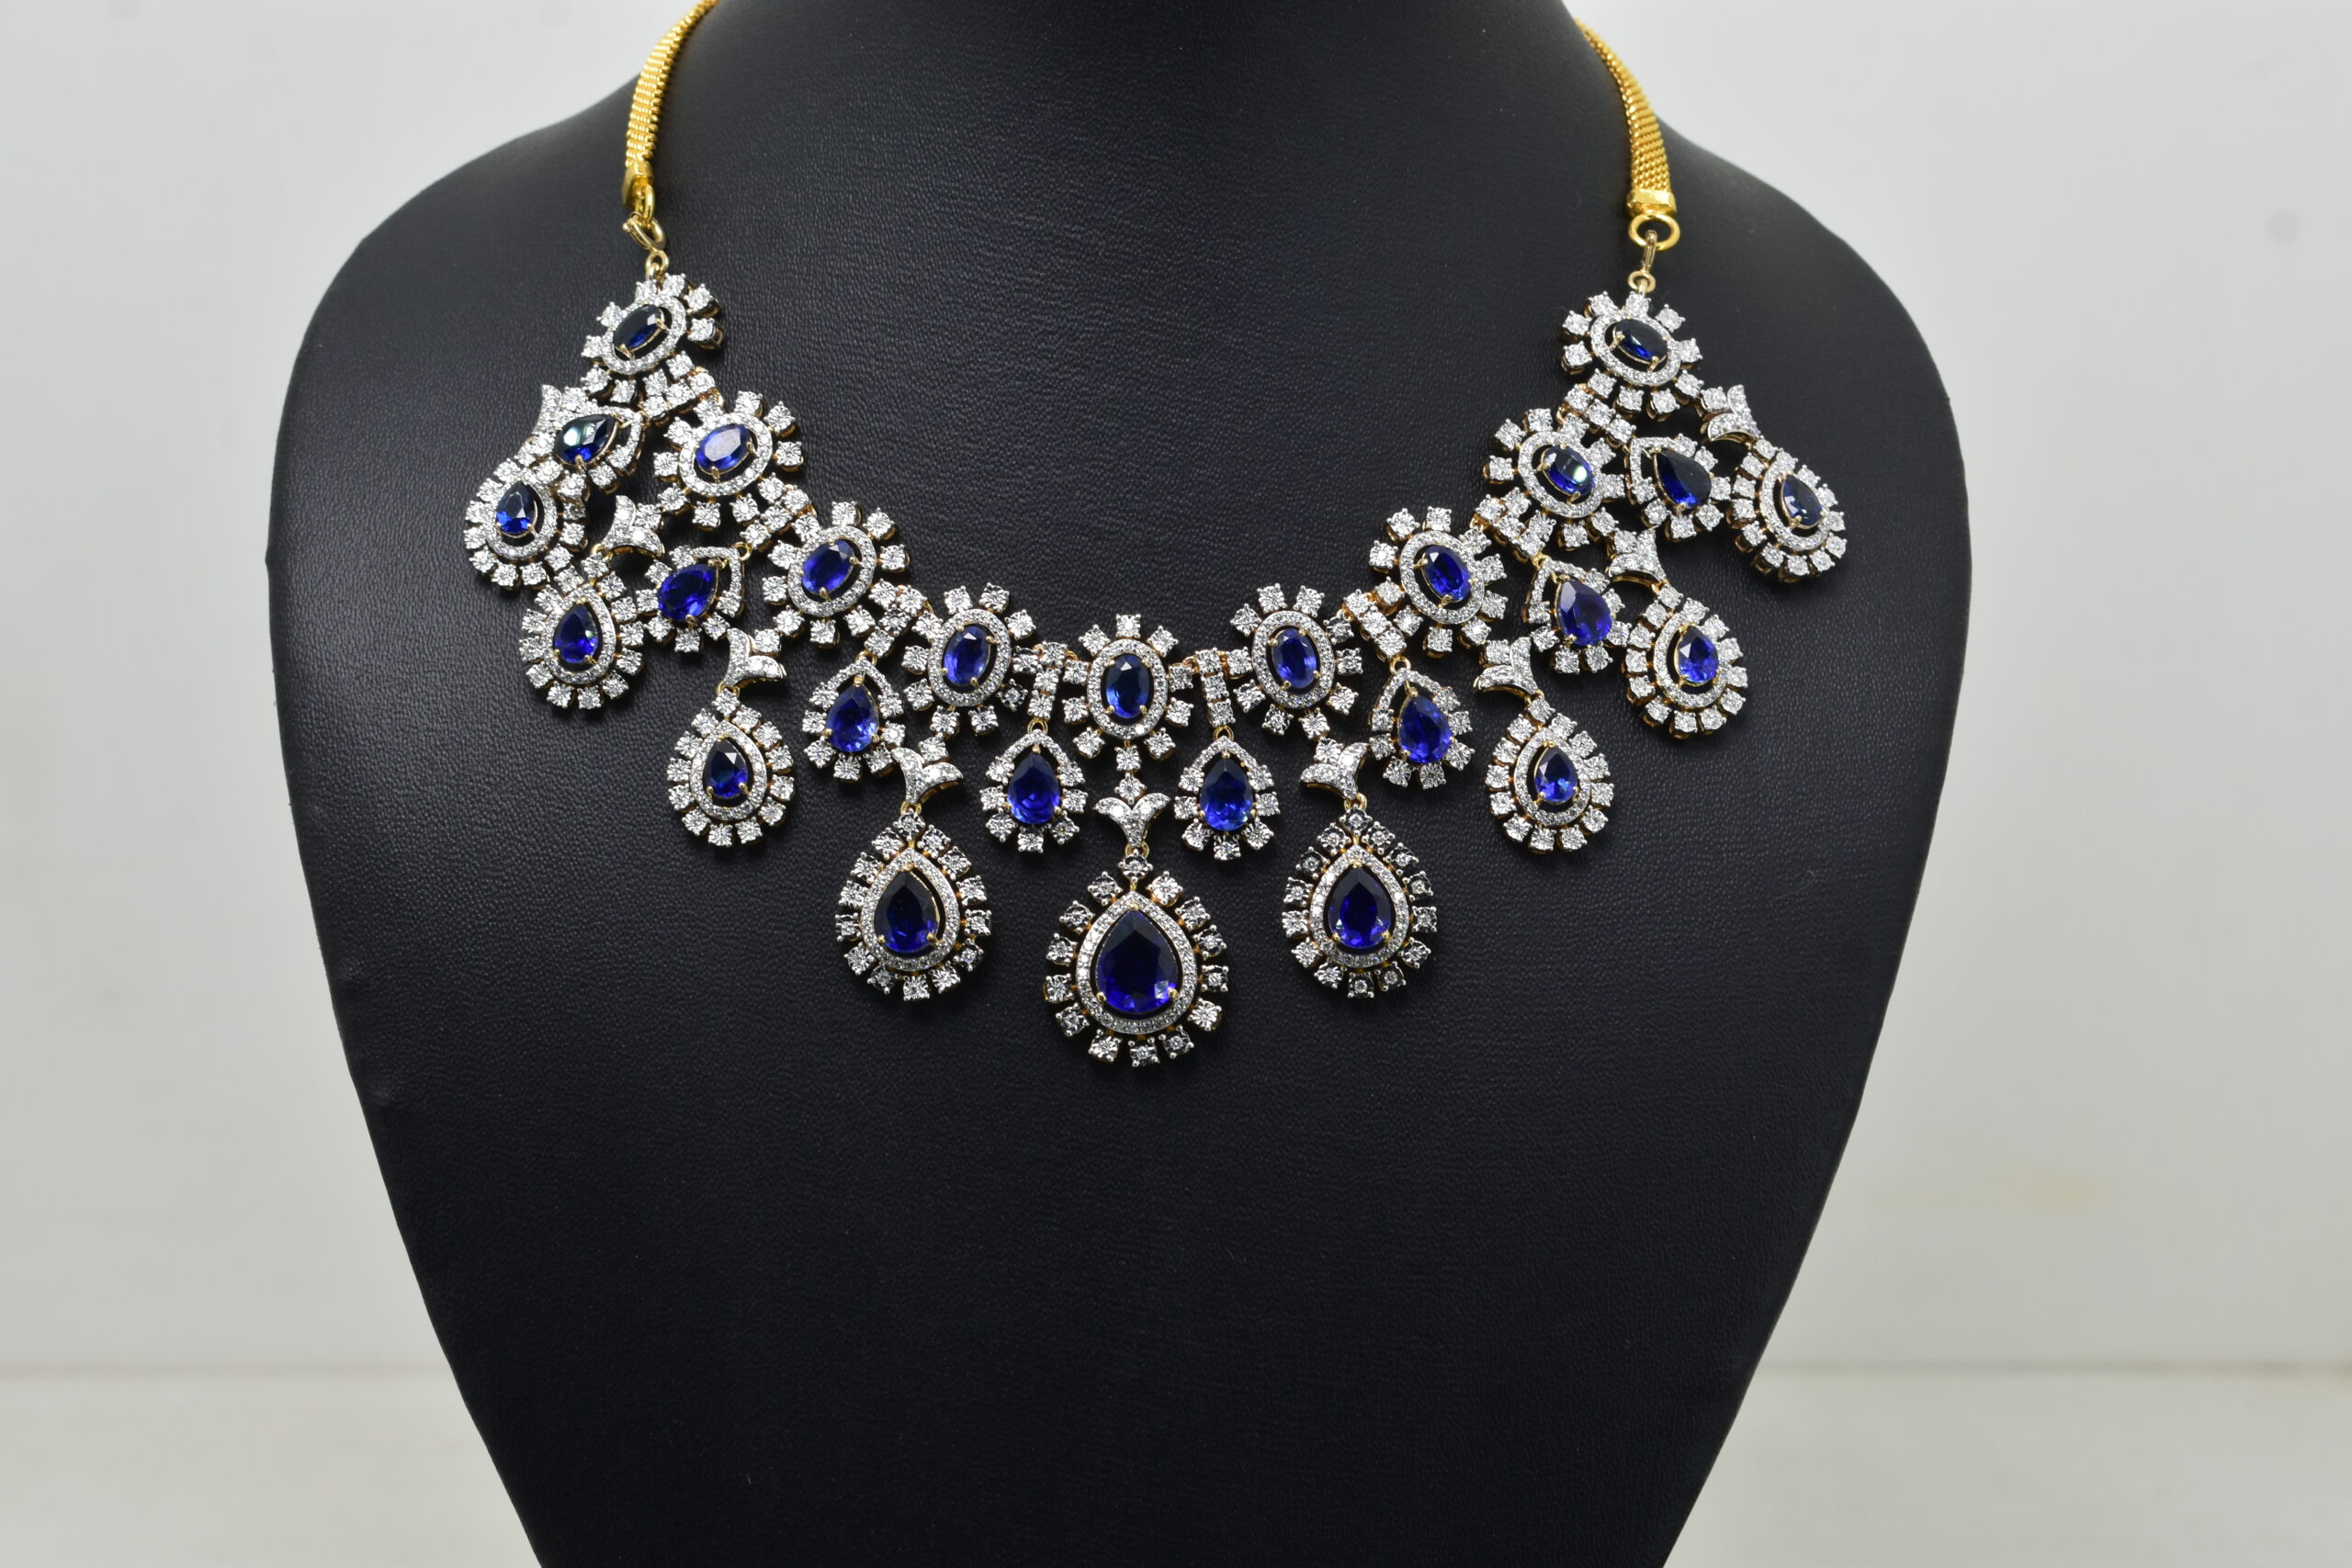 Beautiful Diamond Necklace With Blue Sapphire Stones